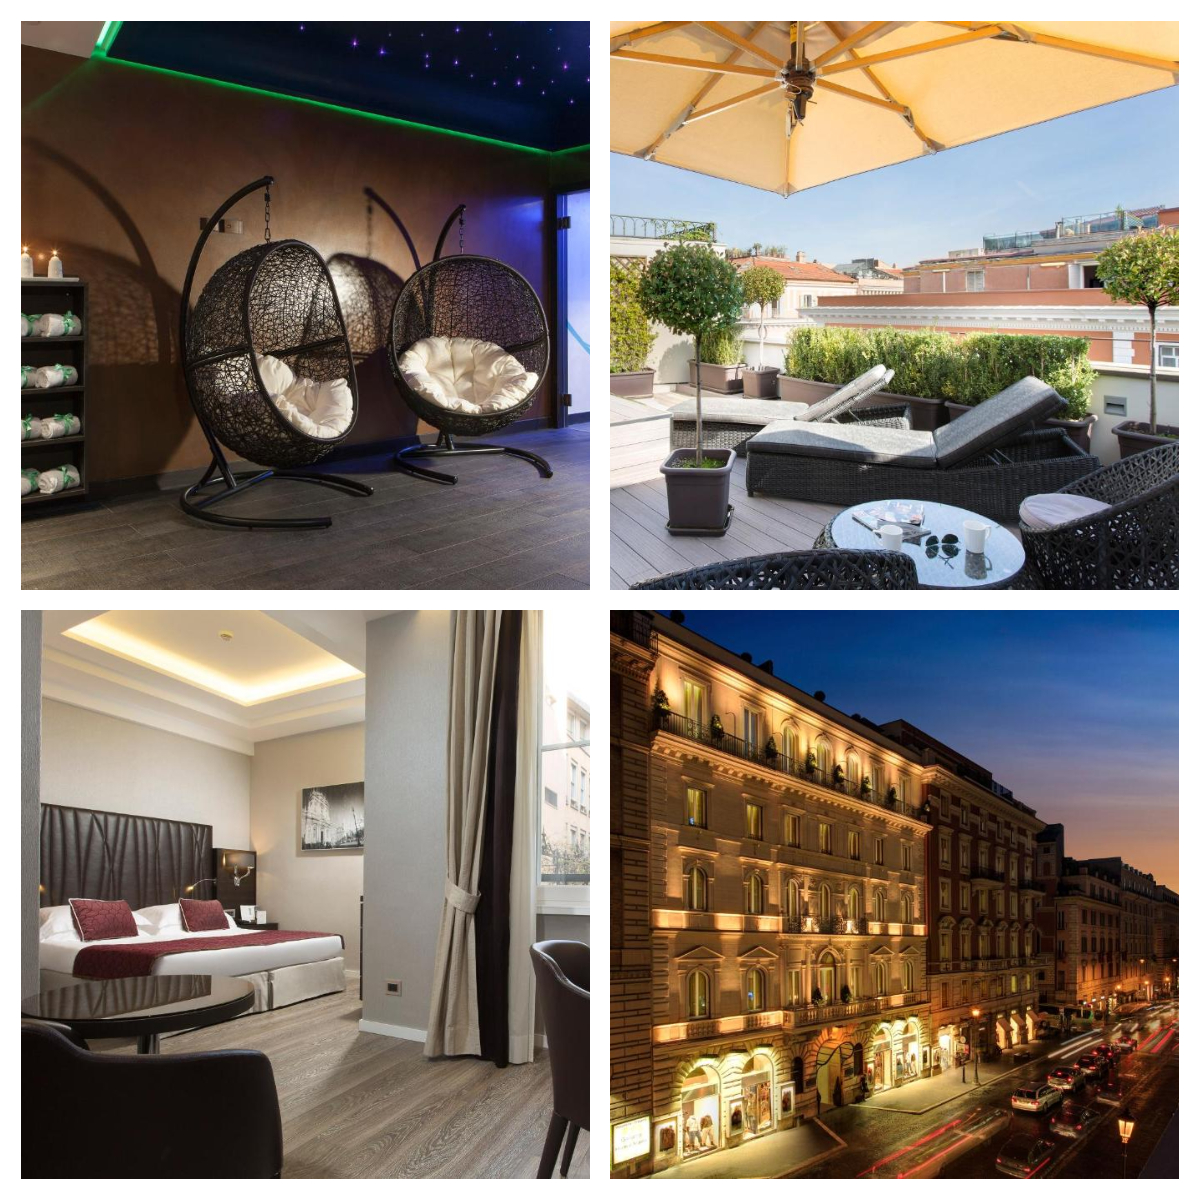 Best hotels in Rome